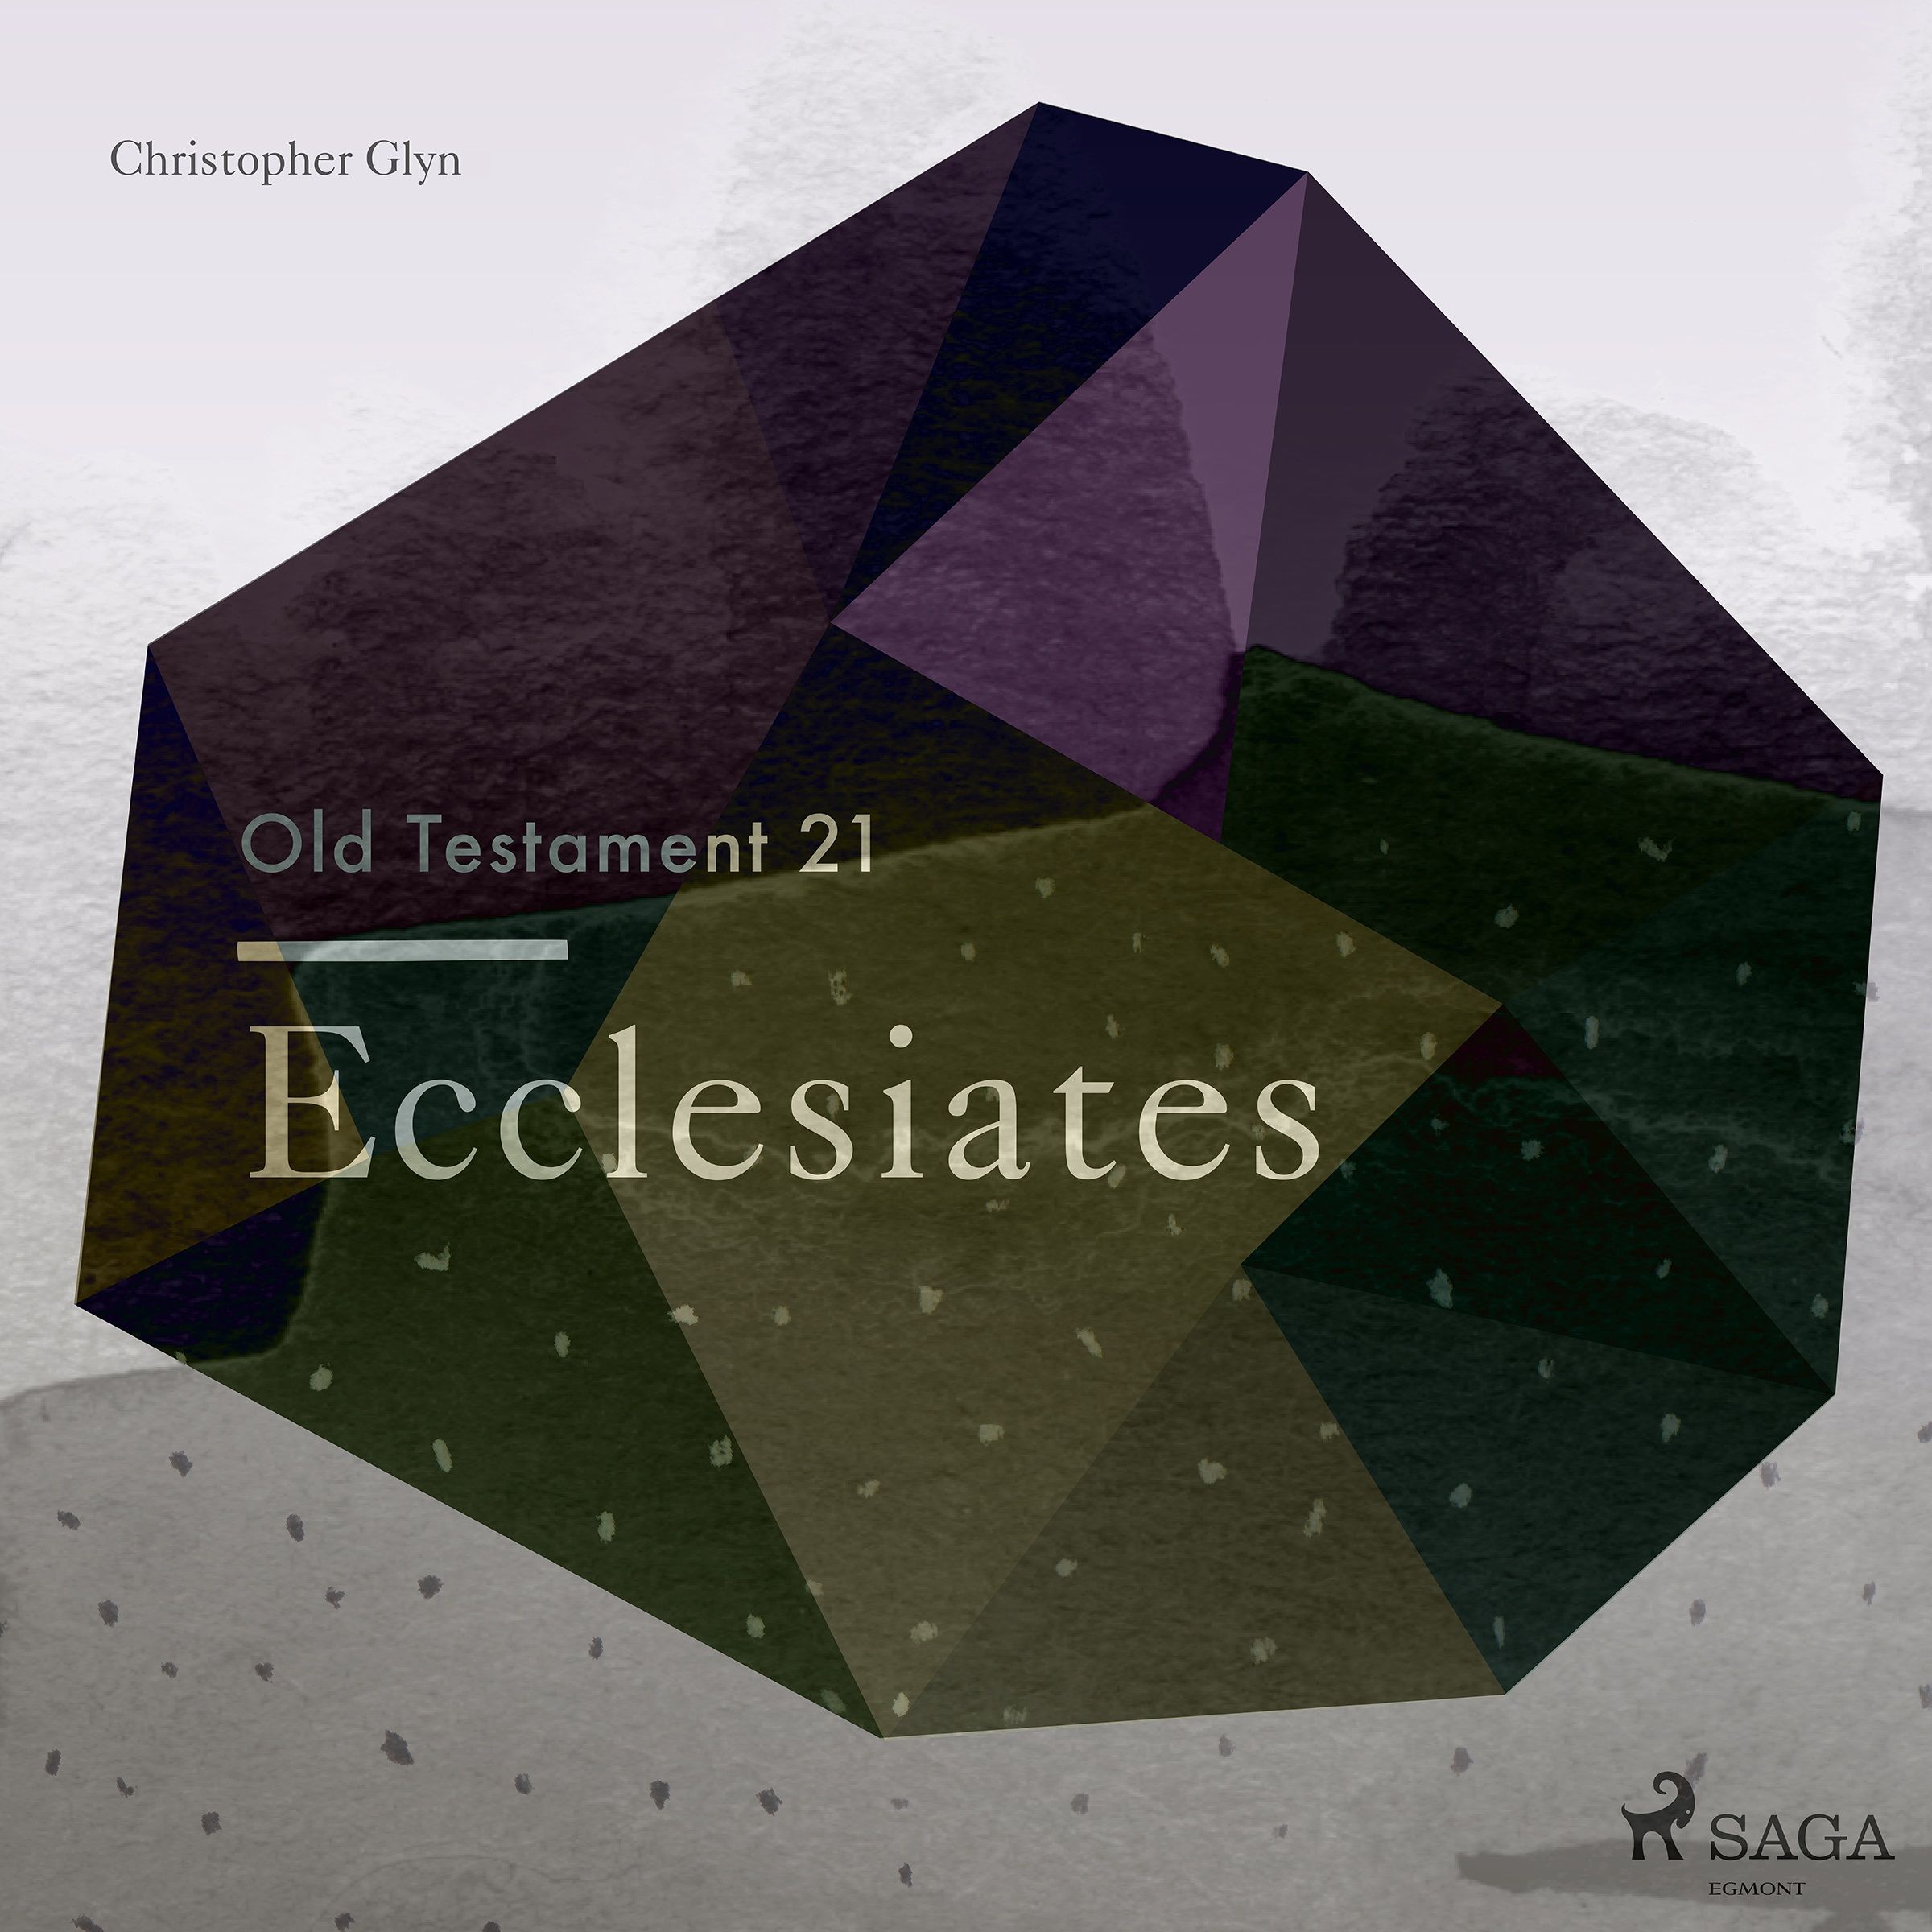 The Old Testament 21 - Ecclesiates, ljudbok av Christopher Glyn